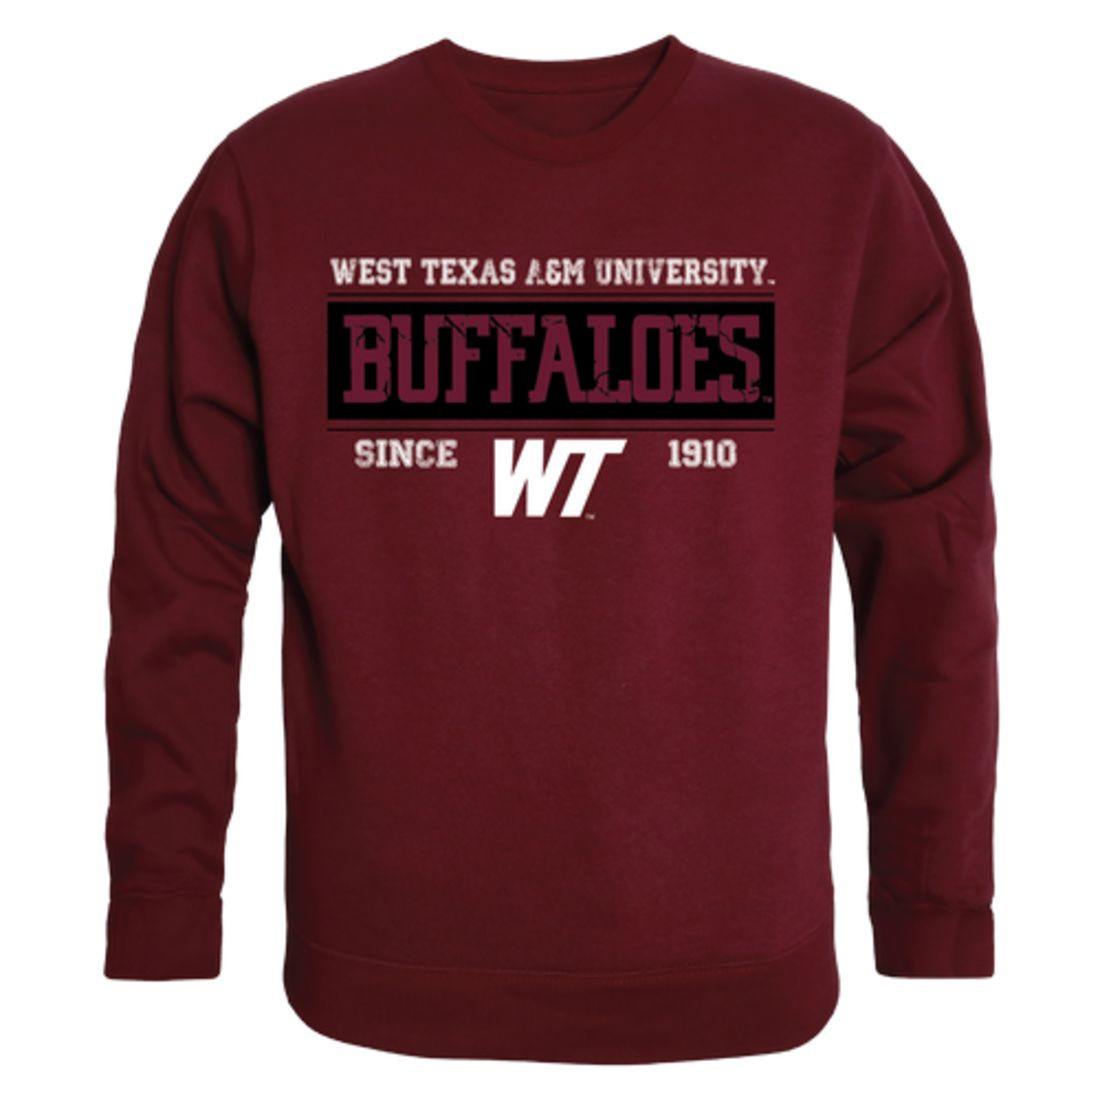 WTAMU West Texas A&M University Buffaloes Established Crewneck Pullover Sweatshirt Sweater Maroon-Campus-Wardrobe